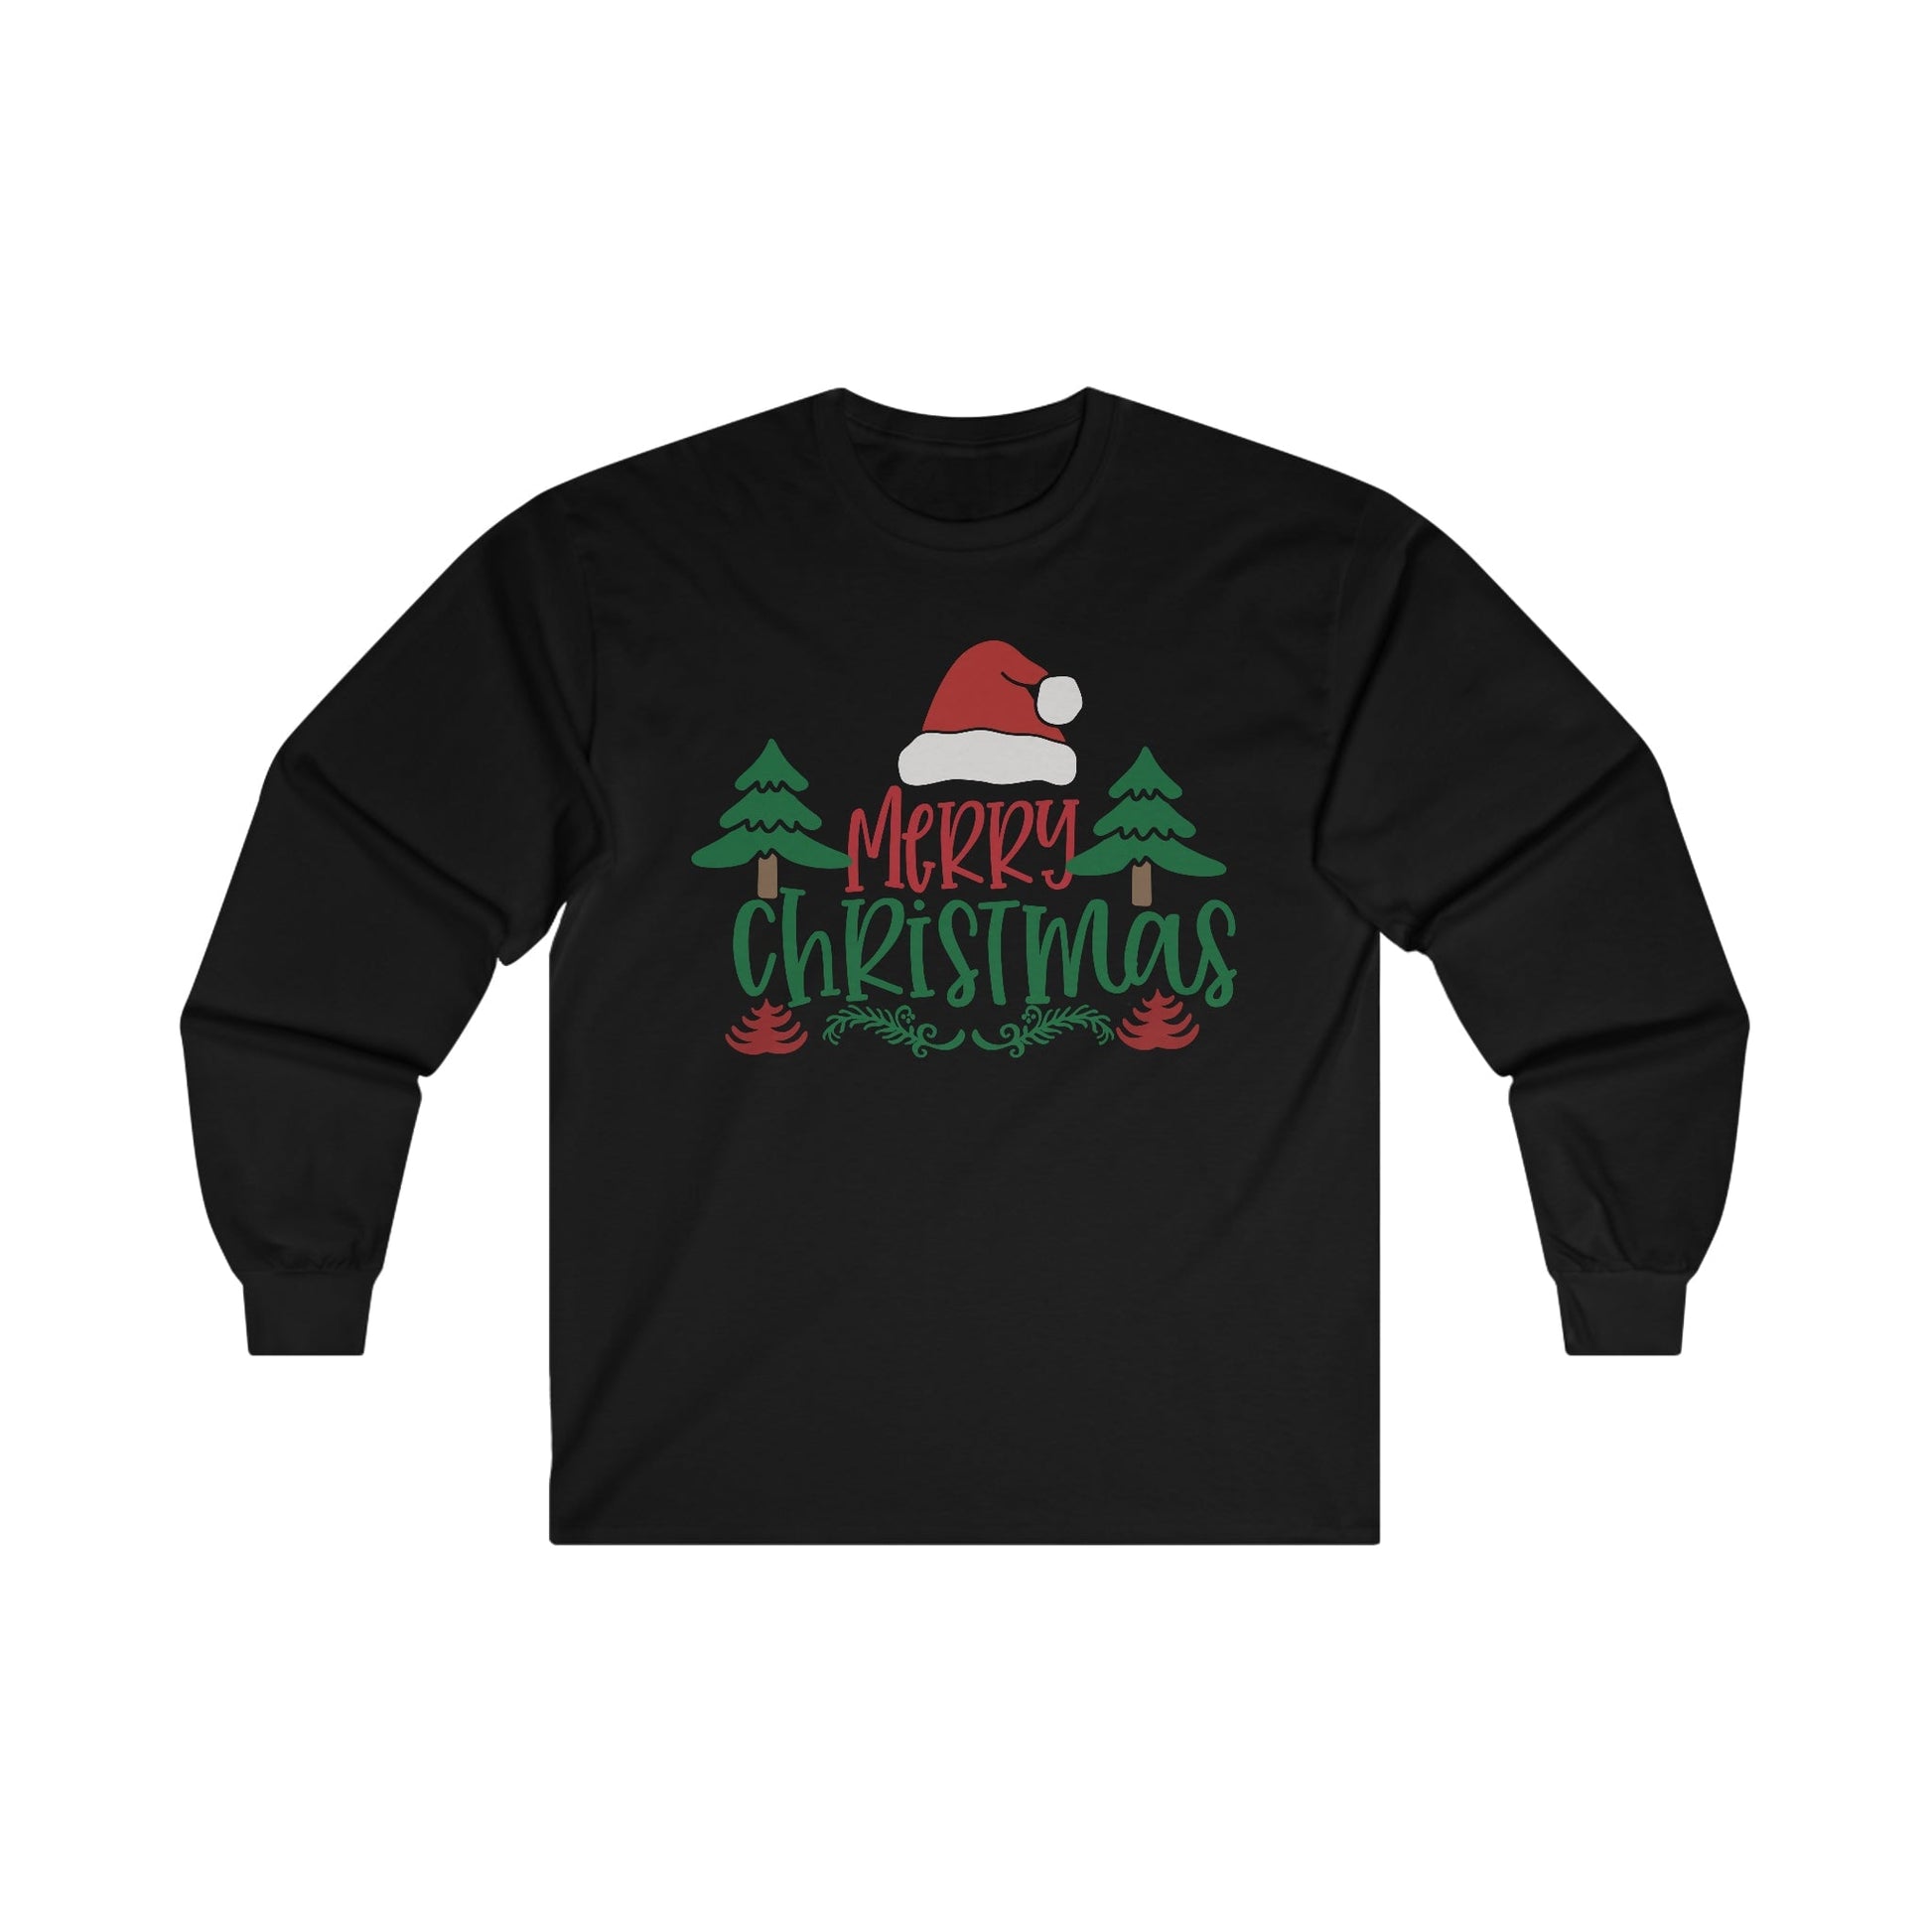 Christmas Long Sleeve T-Shirt - Merry Christmas - Cute Christmas Shirts - Youth and Adult Christmas Long Sleeve TShirts Long Sleeve T-Shirts Graphic Avenue Black Adult Small 